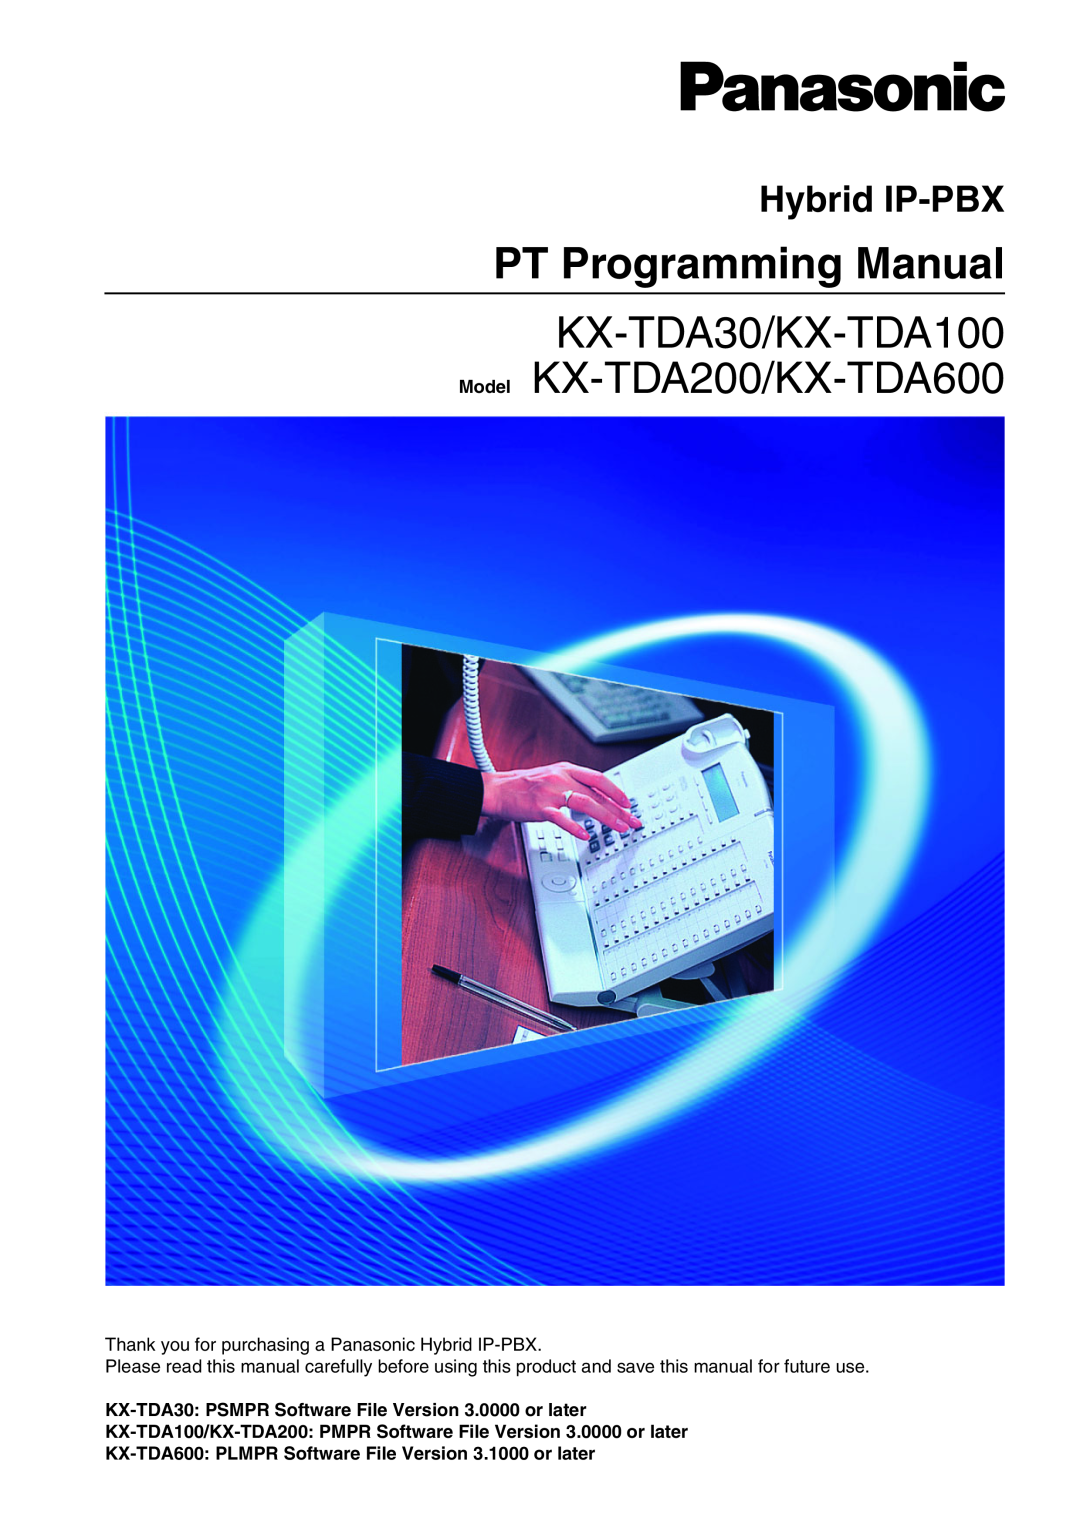 Panasonic manual Hybrid IP-PBX, PT Programming Manual, KX-TDA30/KX-TDA100 Model KX-TDA200/KX-TDA600 